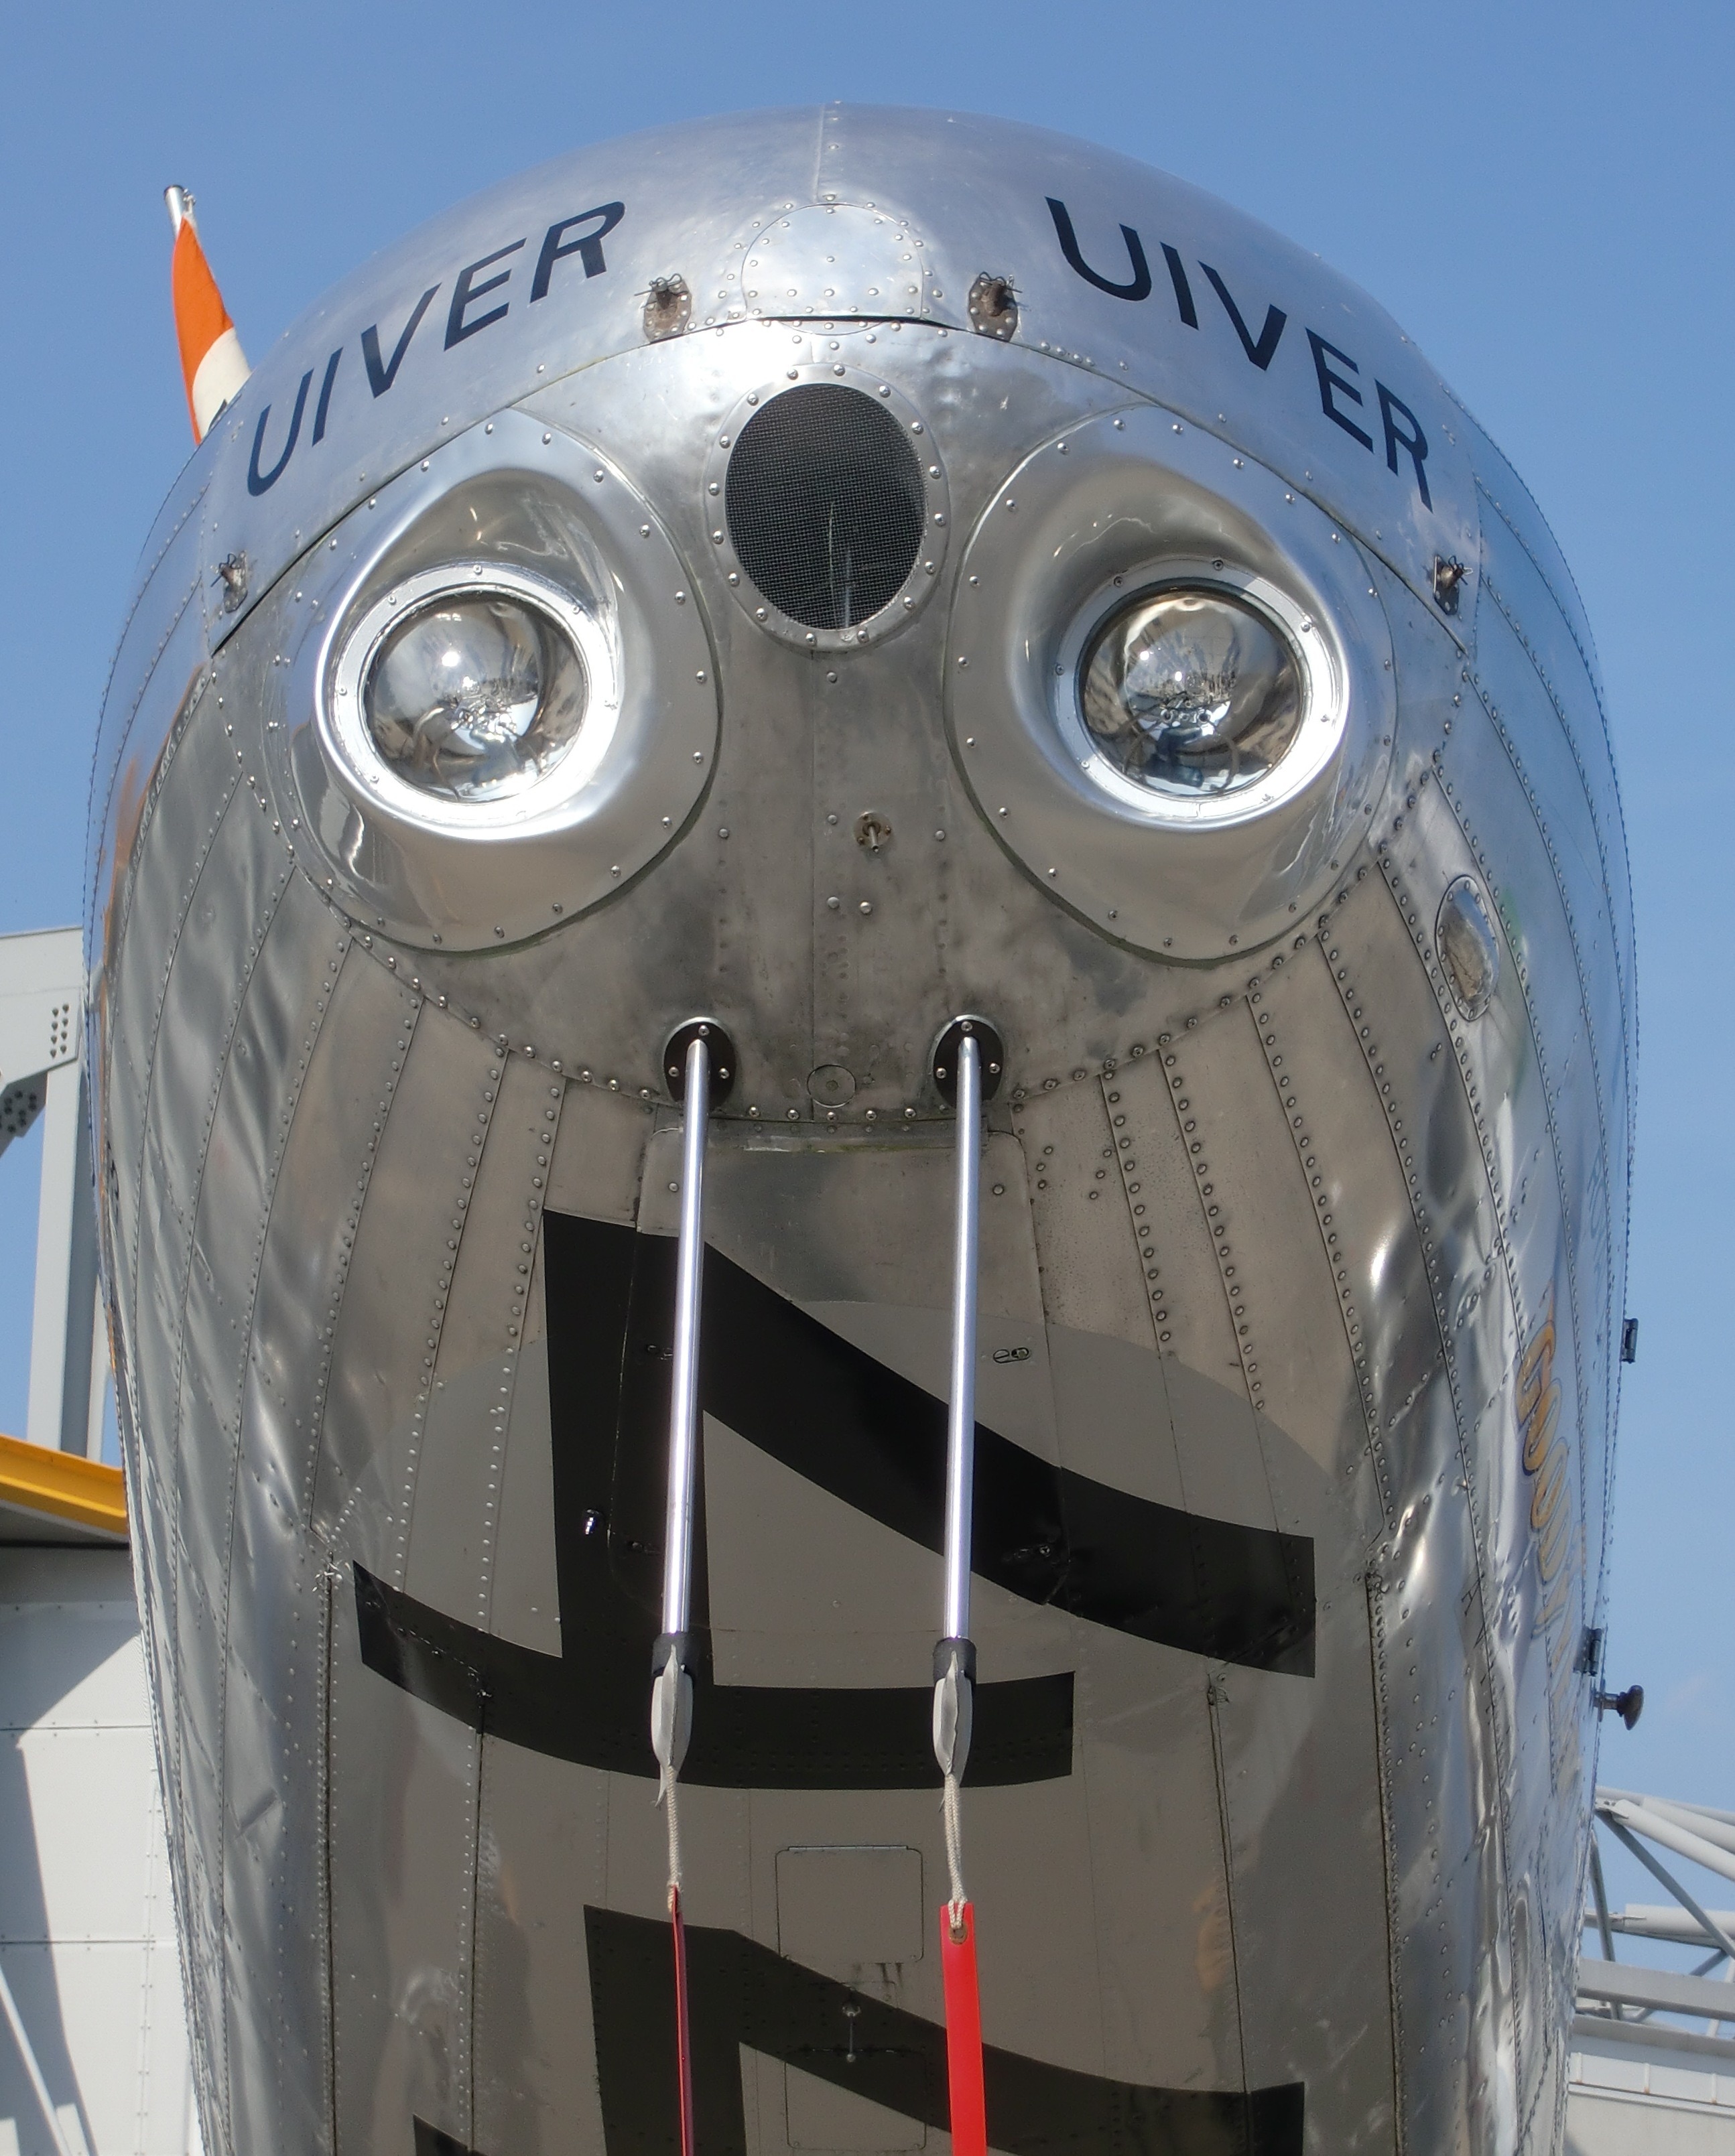 uiver gray metal plane streamline